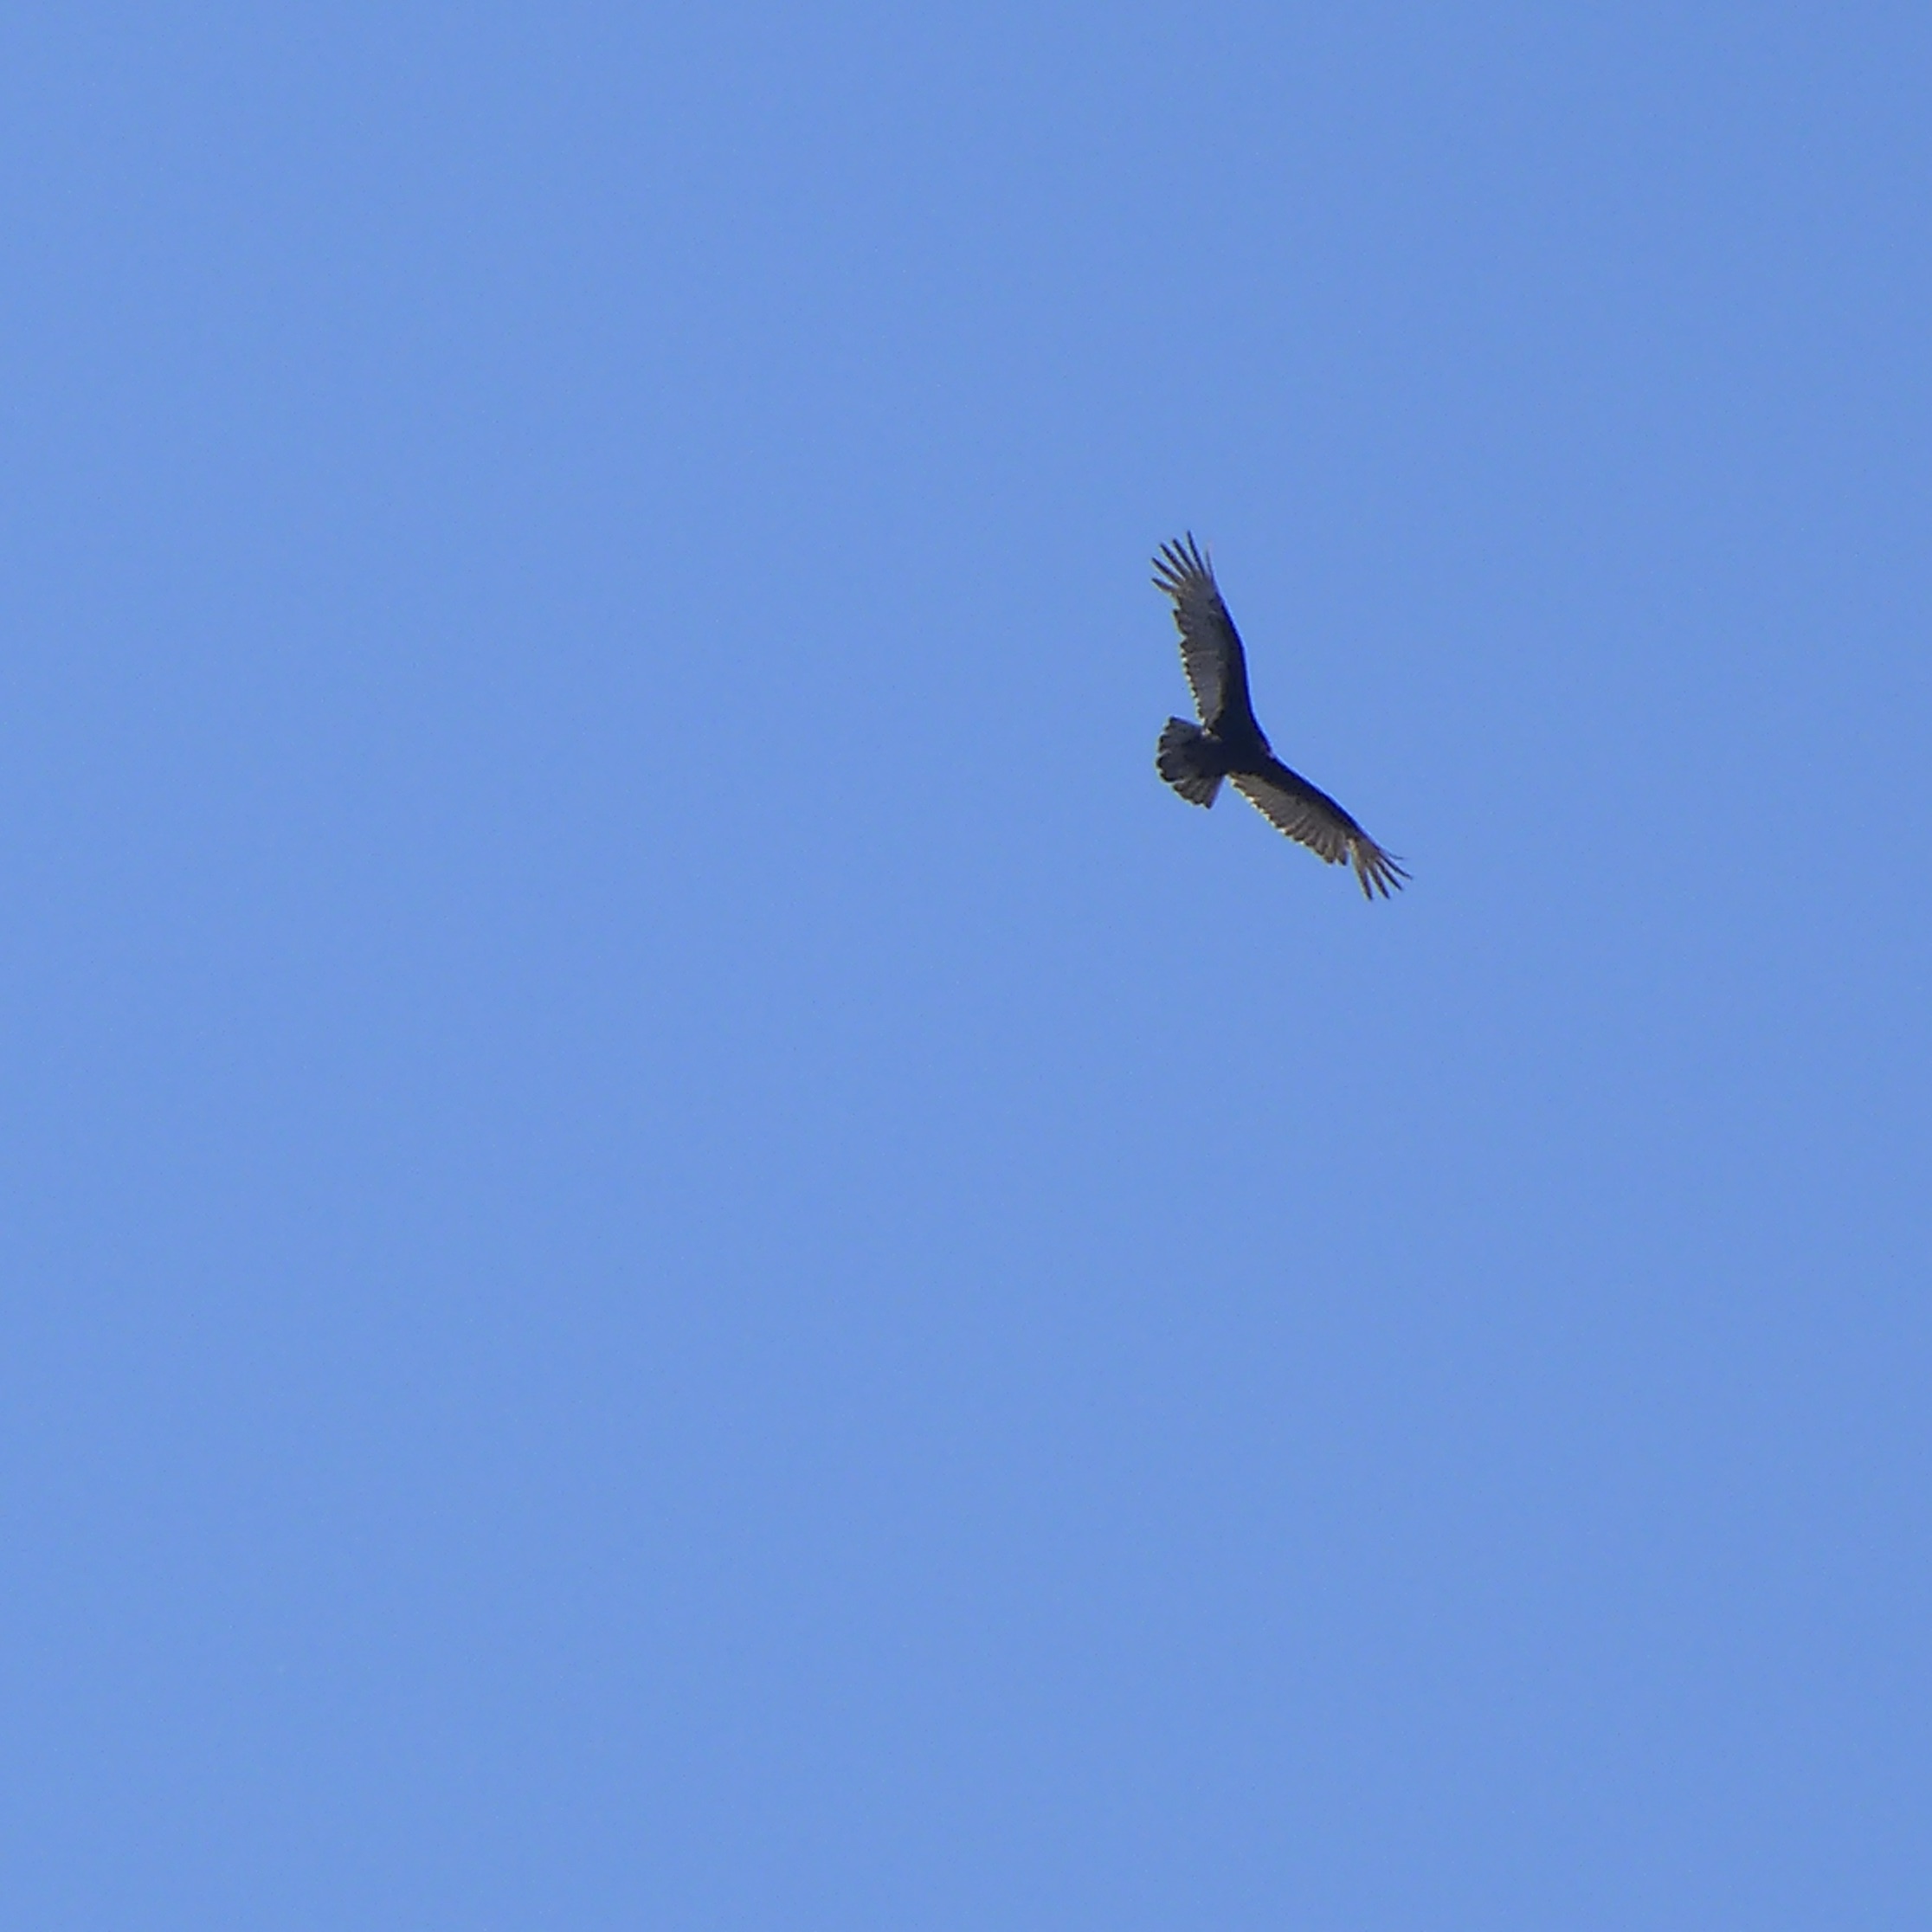 A lone bird soars in a cloudless blue sky